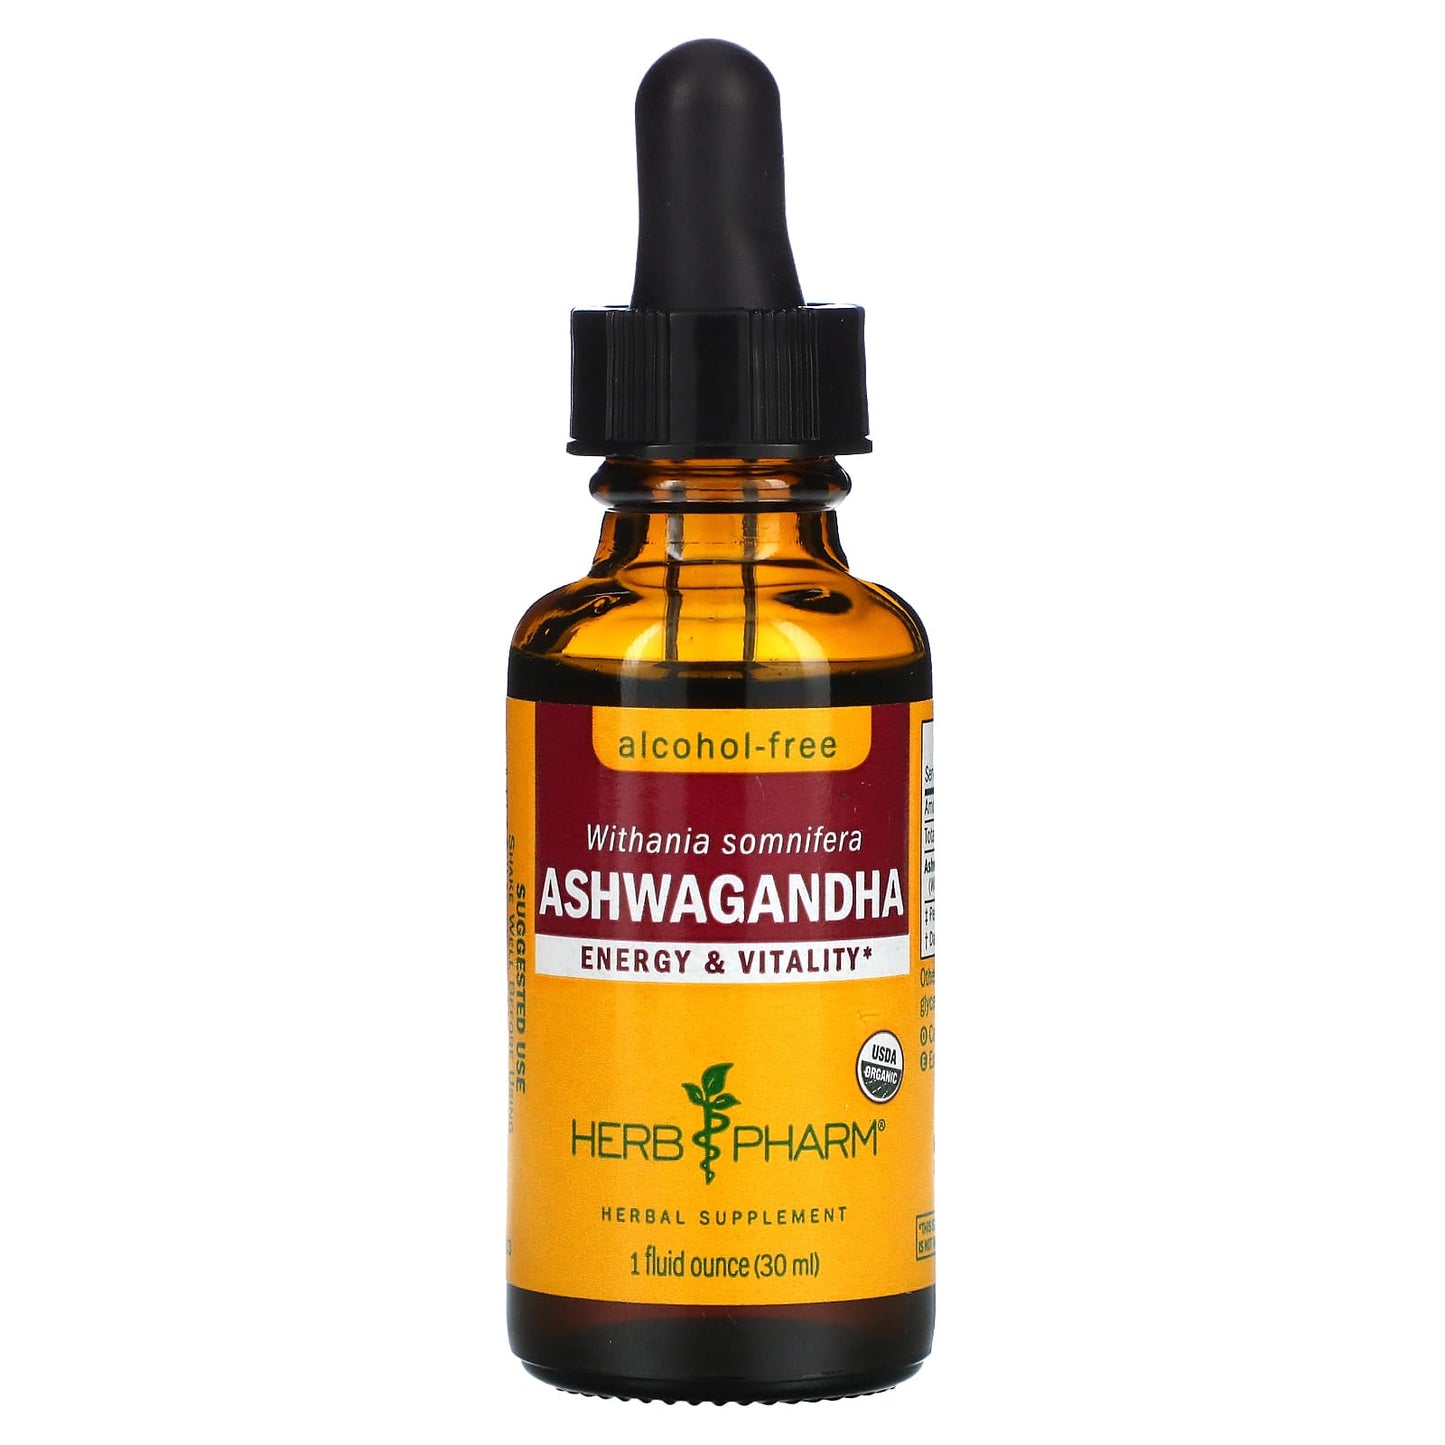 Herb Pharm-Ashwagandha-Alcohol-free-1 fl oz (30 ml)